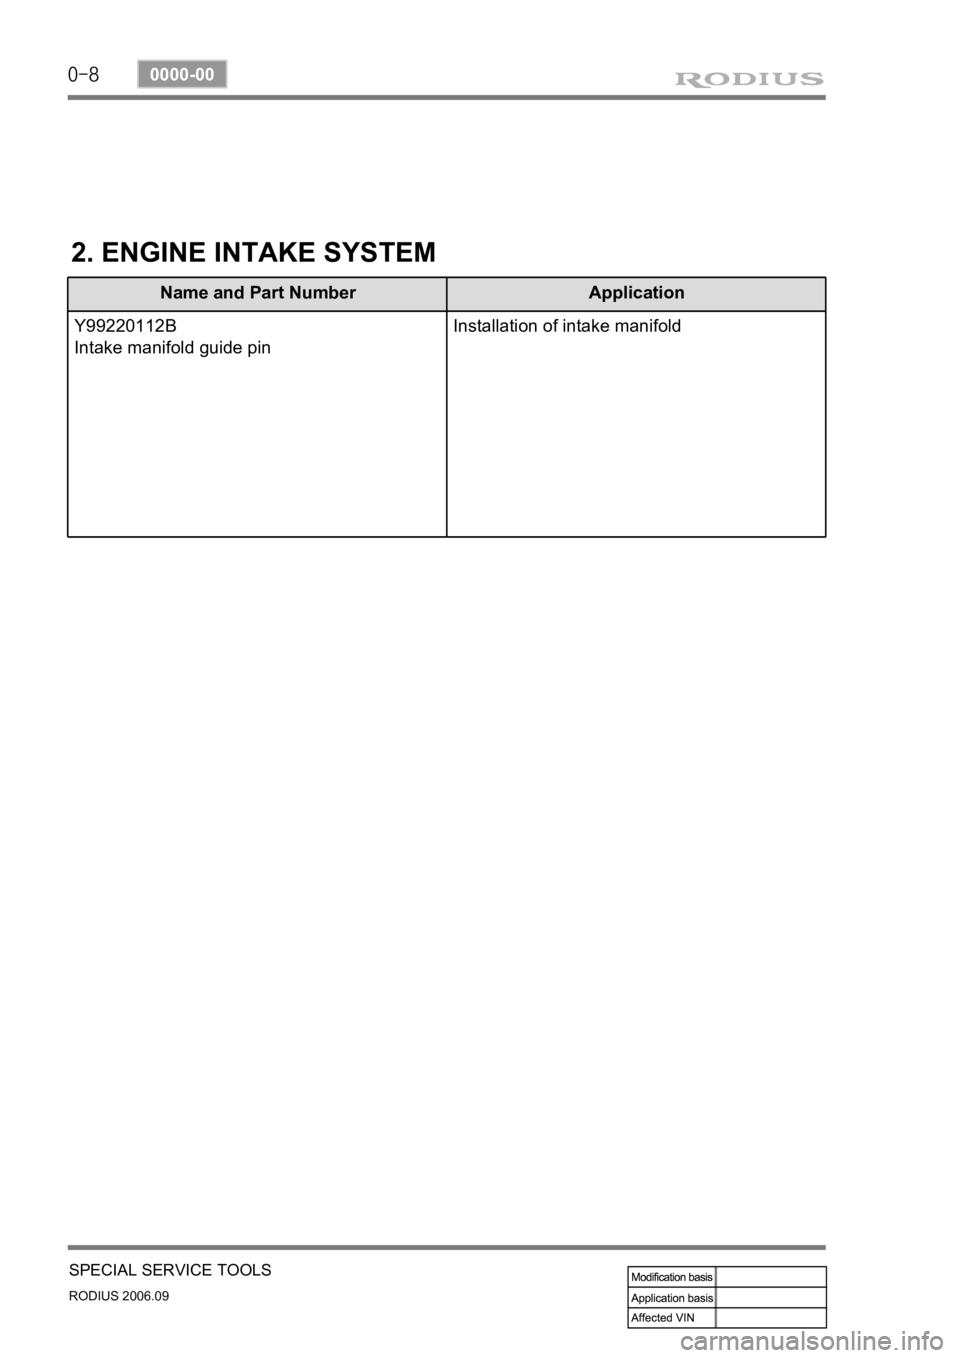 SSANGYONG RODIUS 2007  Service Manual 0-8
RODIUS 2006.09
0000-00
SPECIAL SERVICE TOOLS
Name and Part Number Application
Y99220112B
Intake manifold guide pinInstallation of intake manifold
2. ENGINE INTAKE SYSTEM 